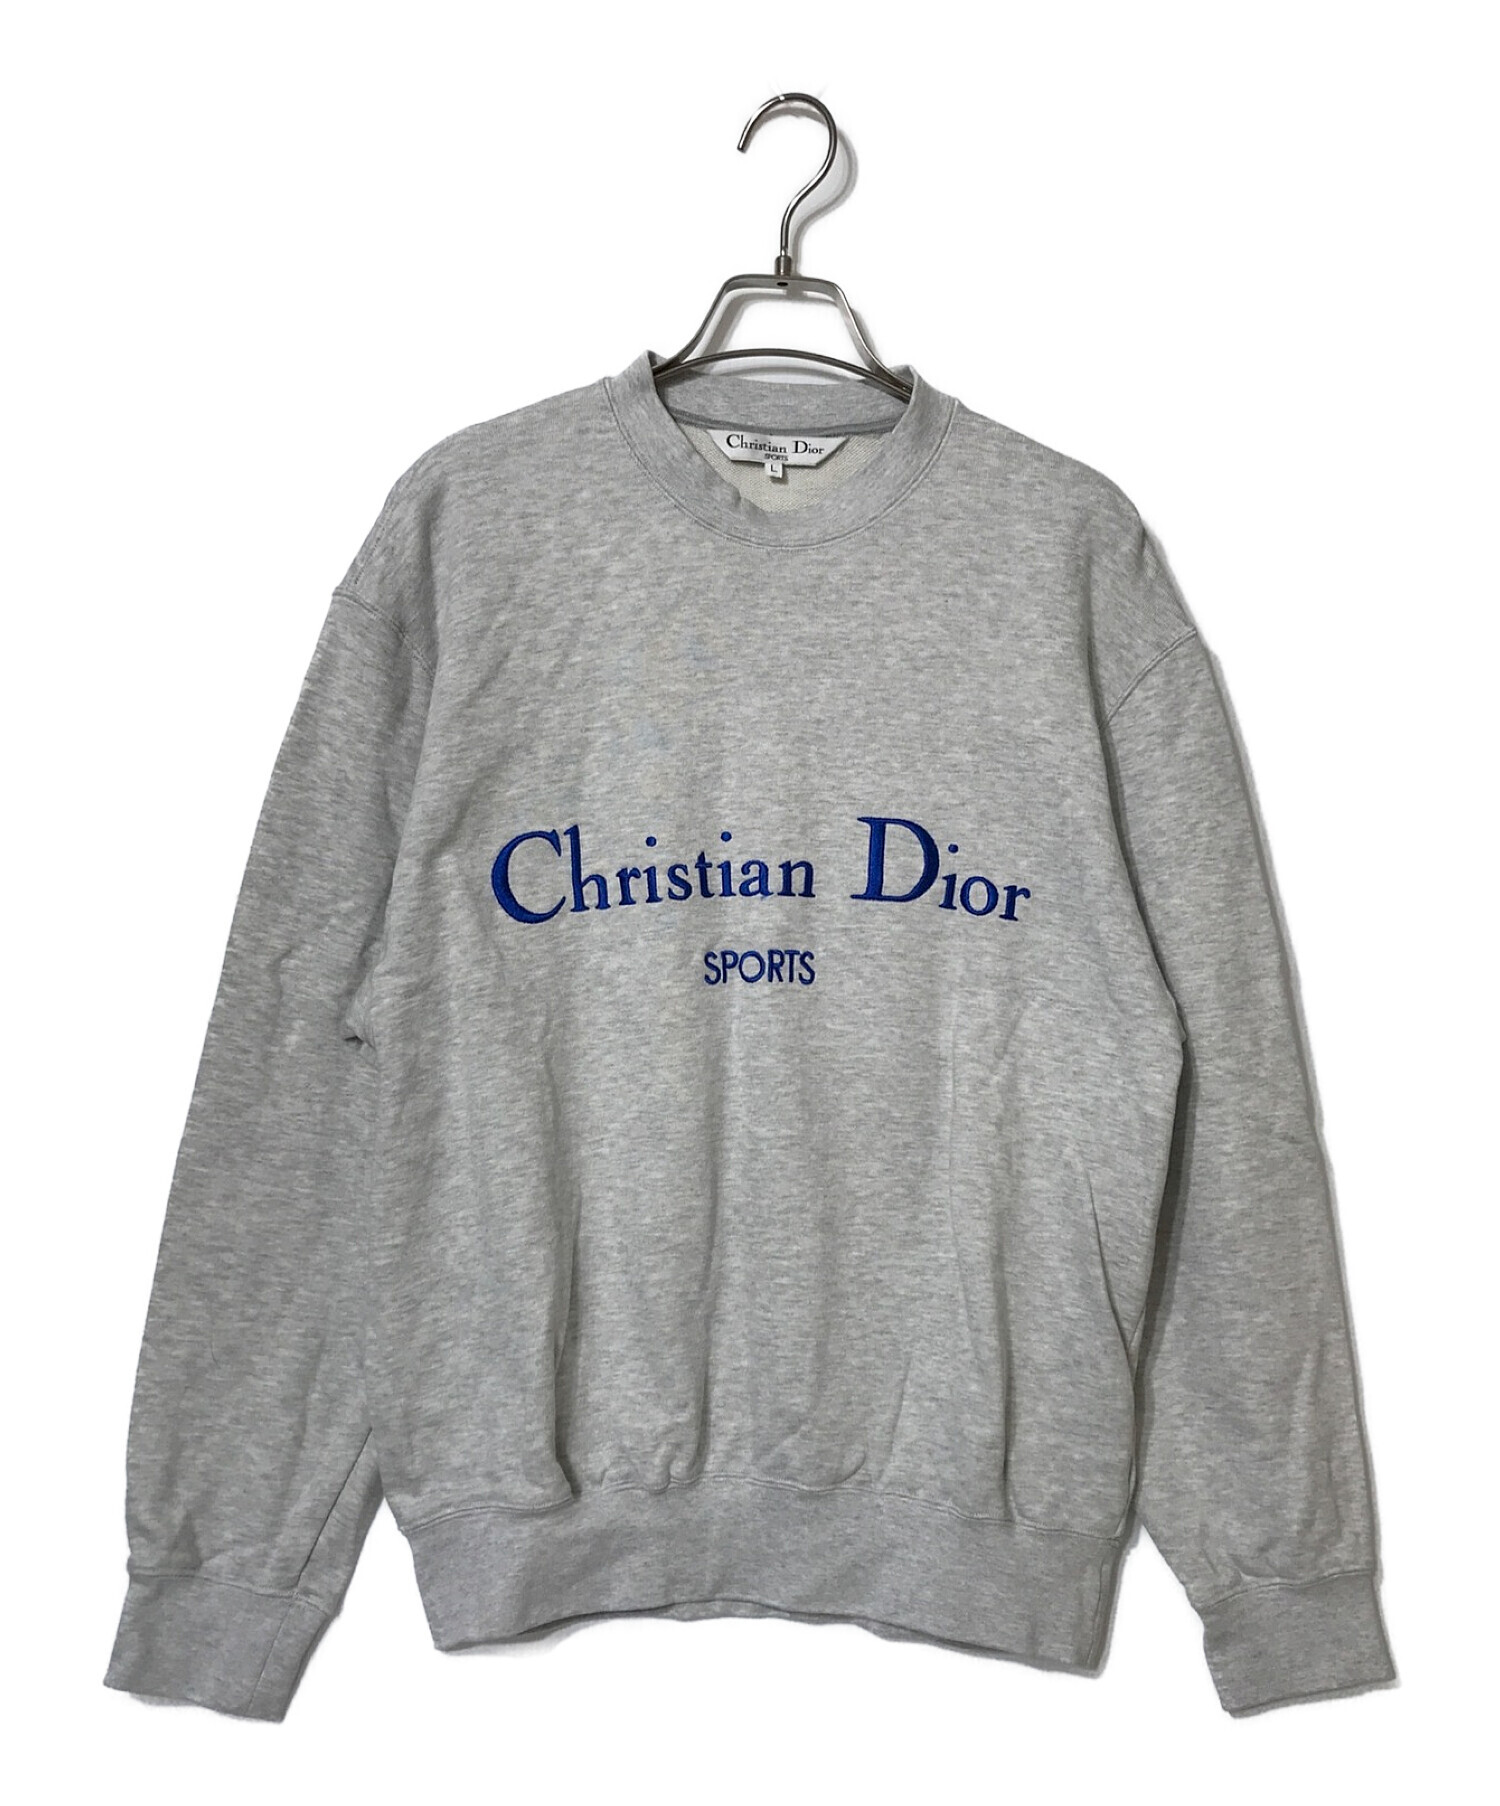 Christian Dior Sports (クリスチャンディオールスポーツ) ロゴスウェット グレー サイズ:L